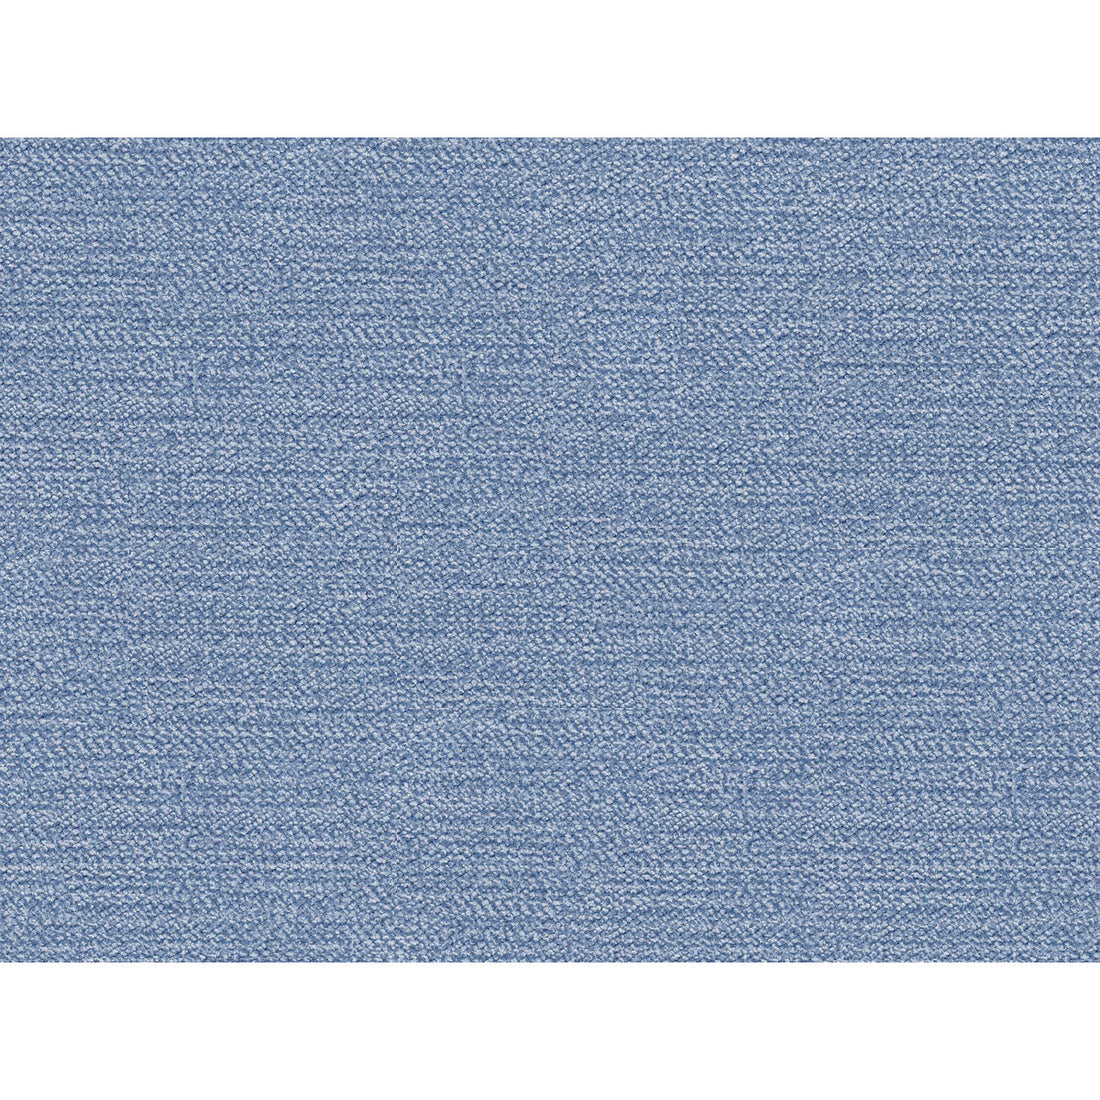 Kravet Smart fabric in 34294-15 color - pattern 34294.15.0 - by Kravet Smart